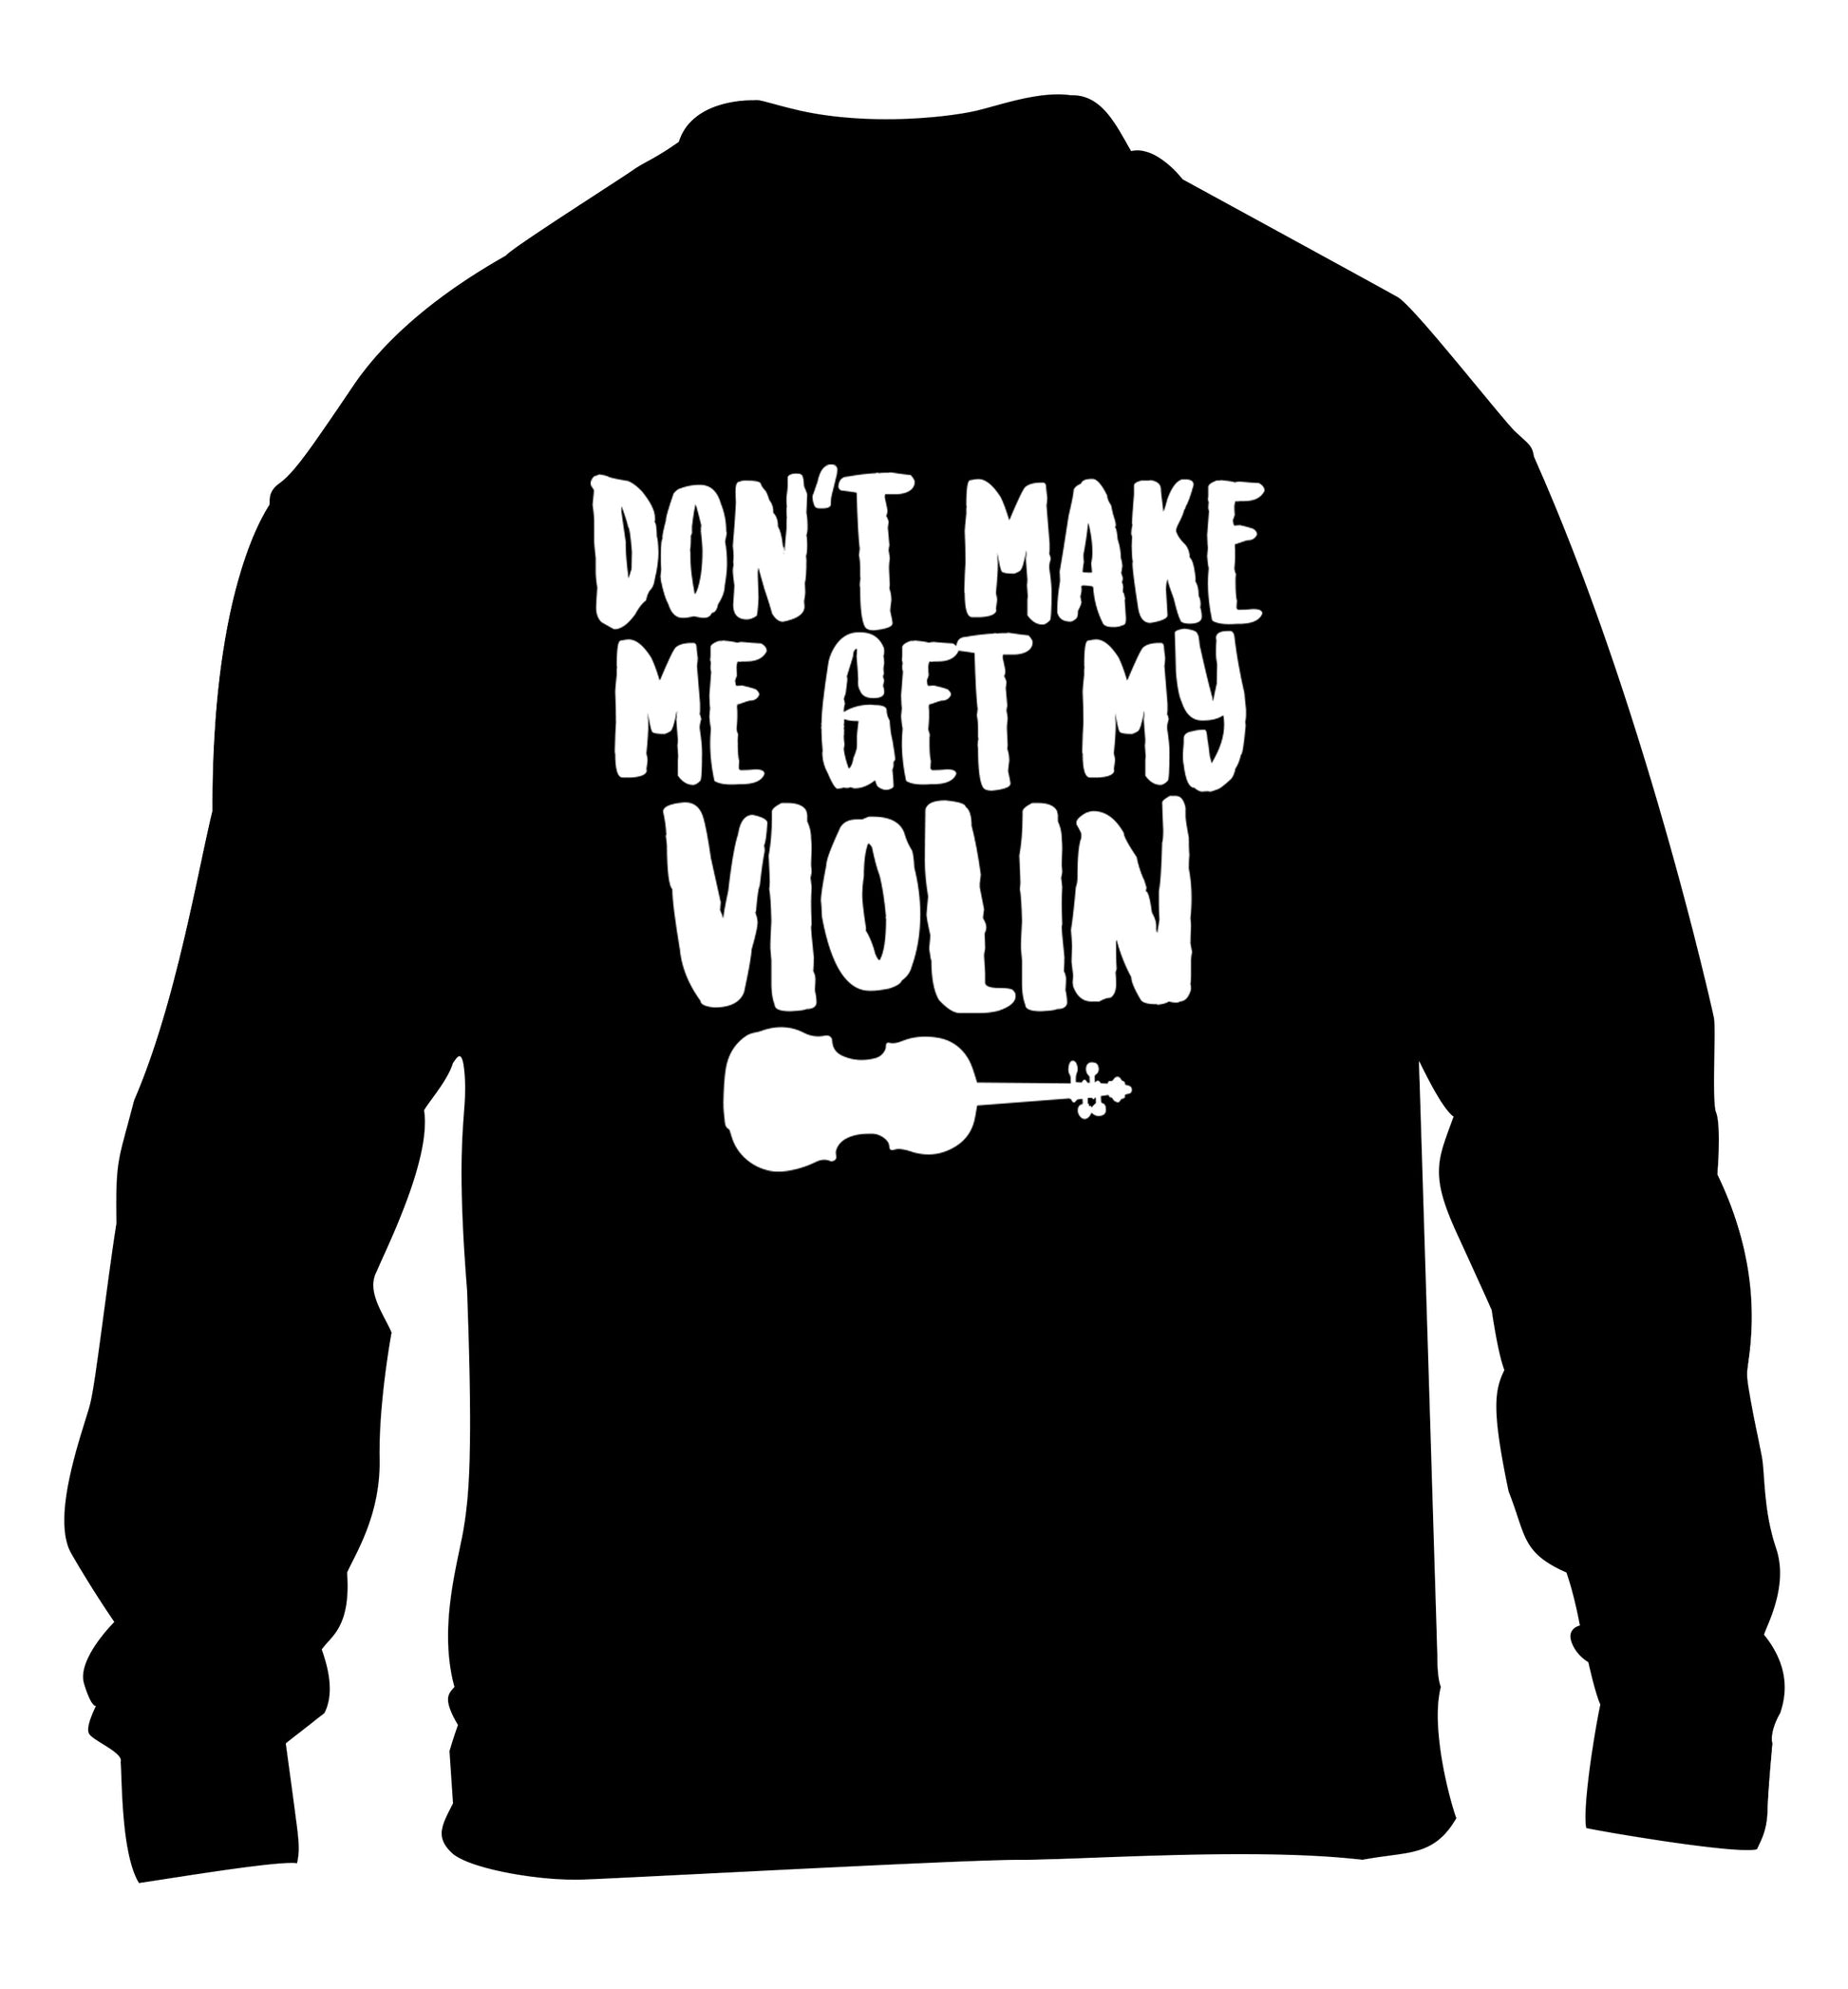 Don't make me get my violin children's black sweater 12-13 Years